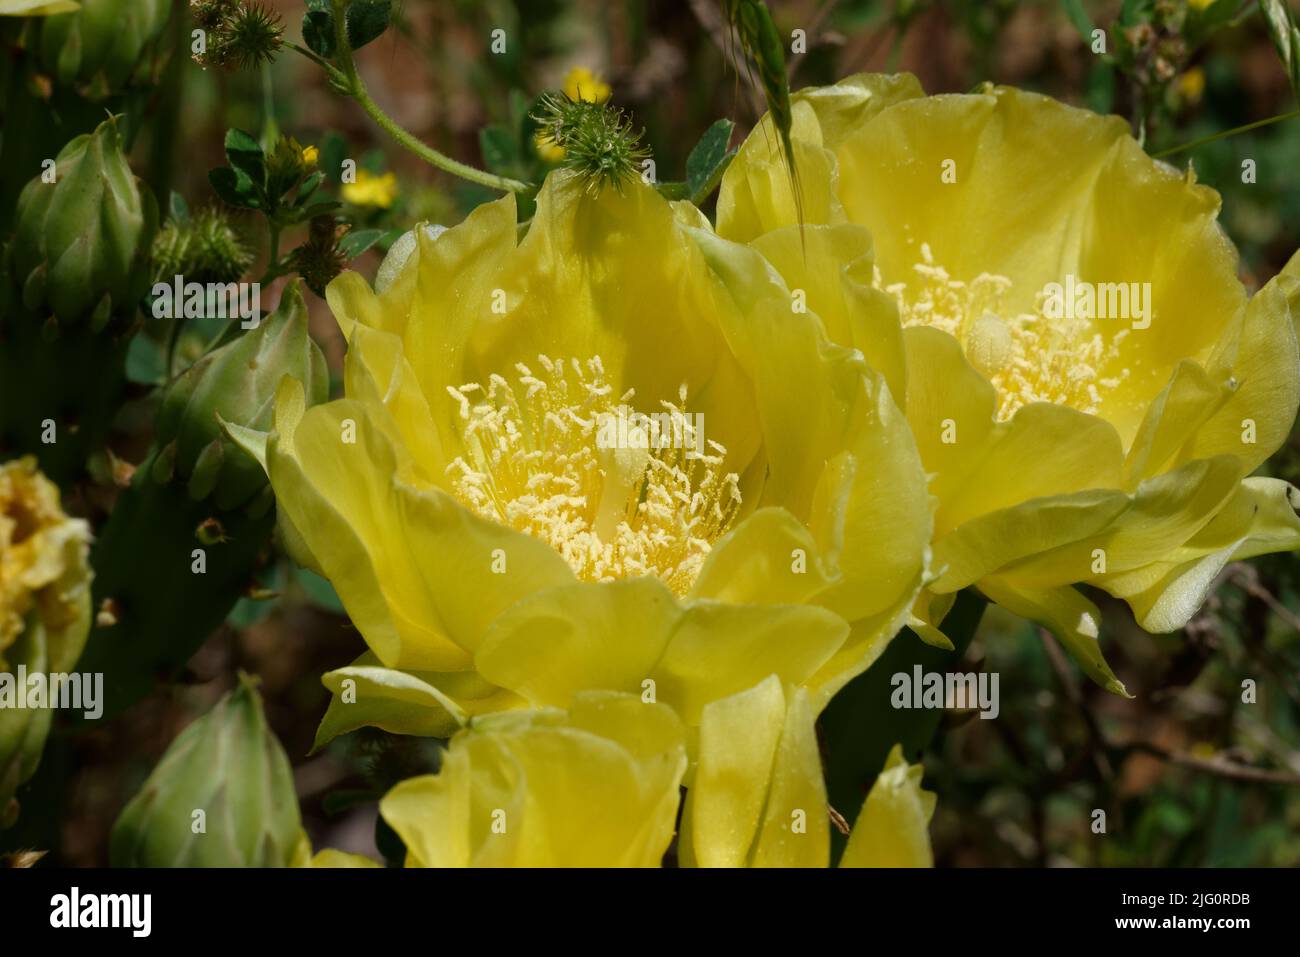 Prickly pear cactus flowering Stock Photo